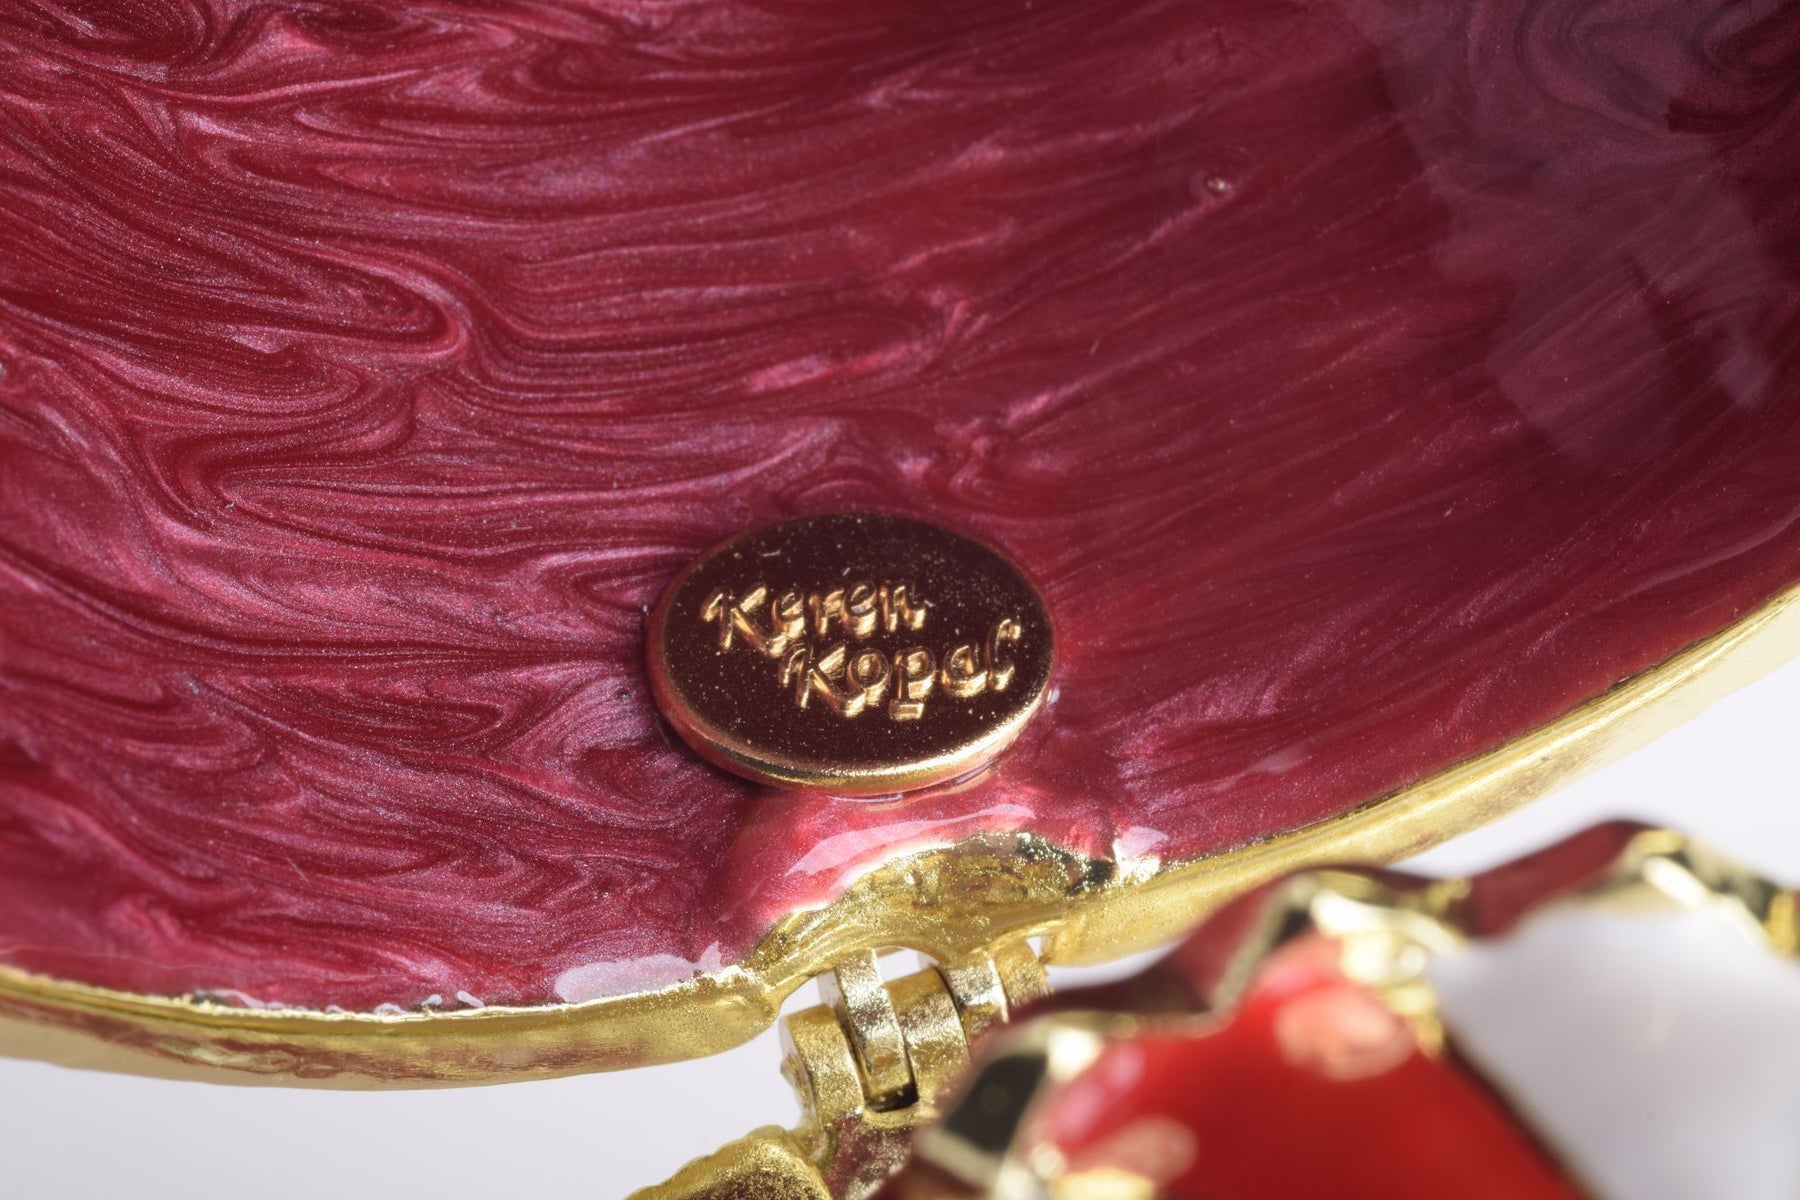 Red Faberge Egg with Horse Carousel Surprise Inside Carousel music box Keren Kopal